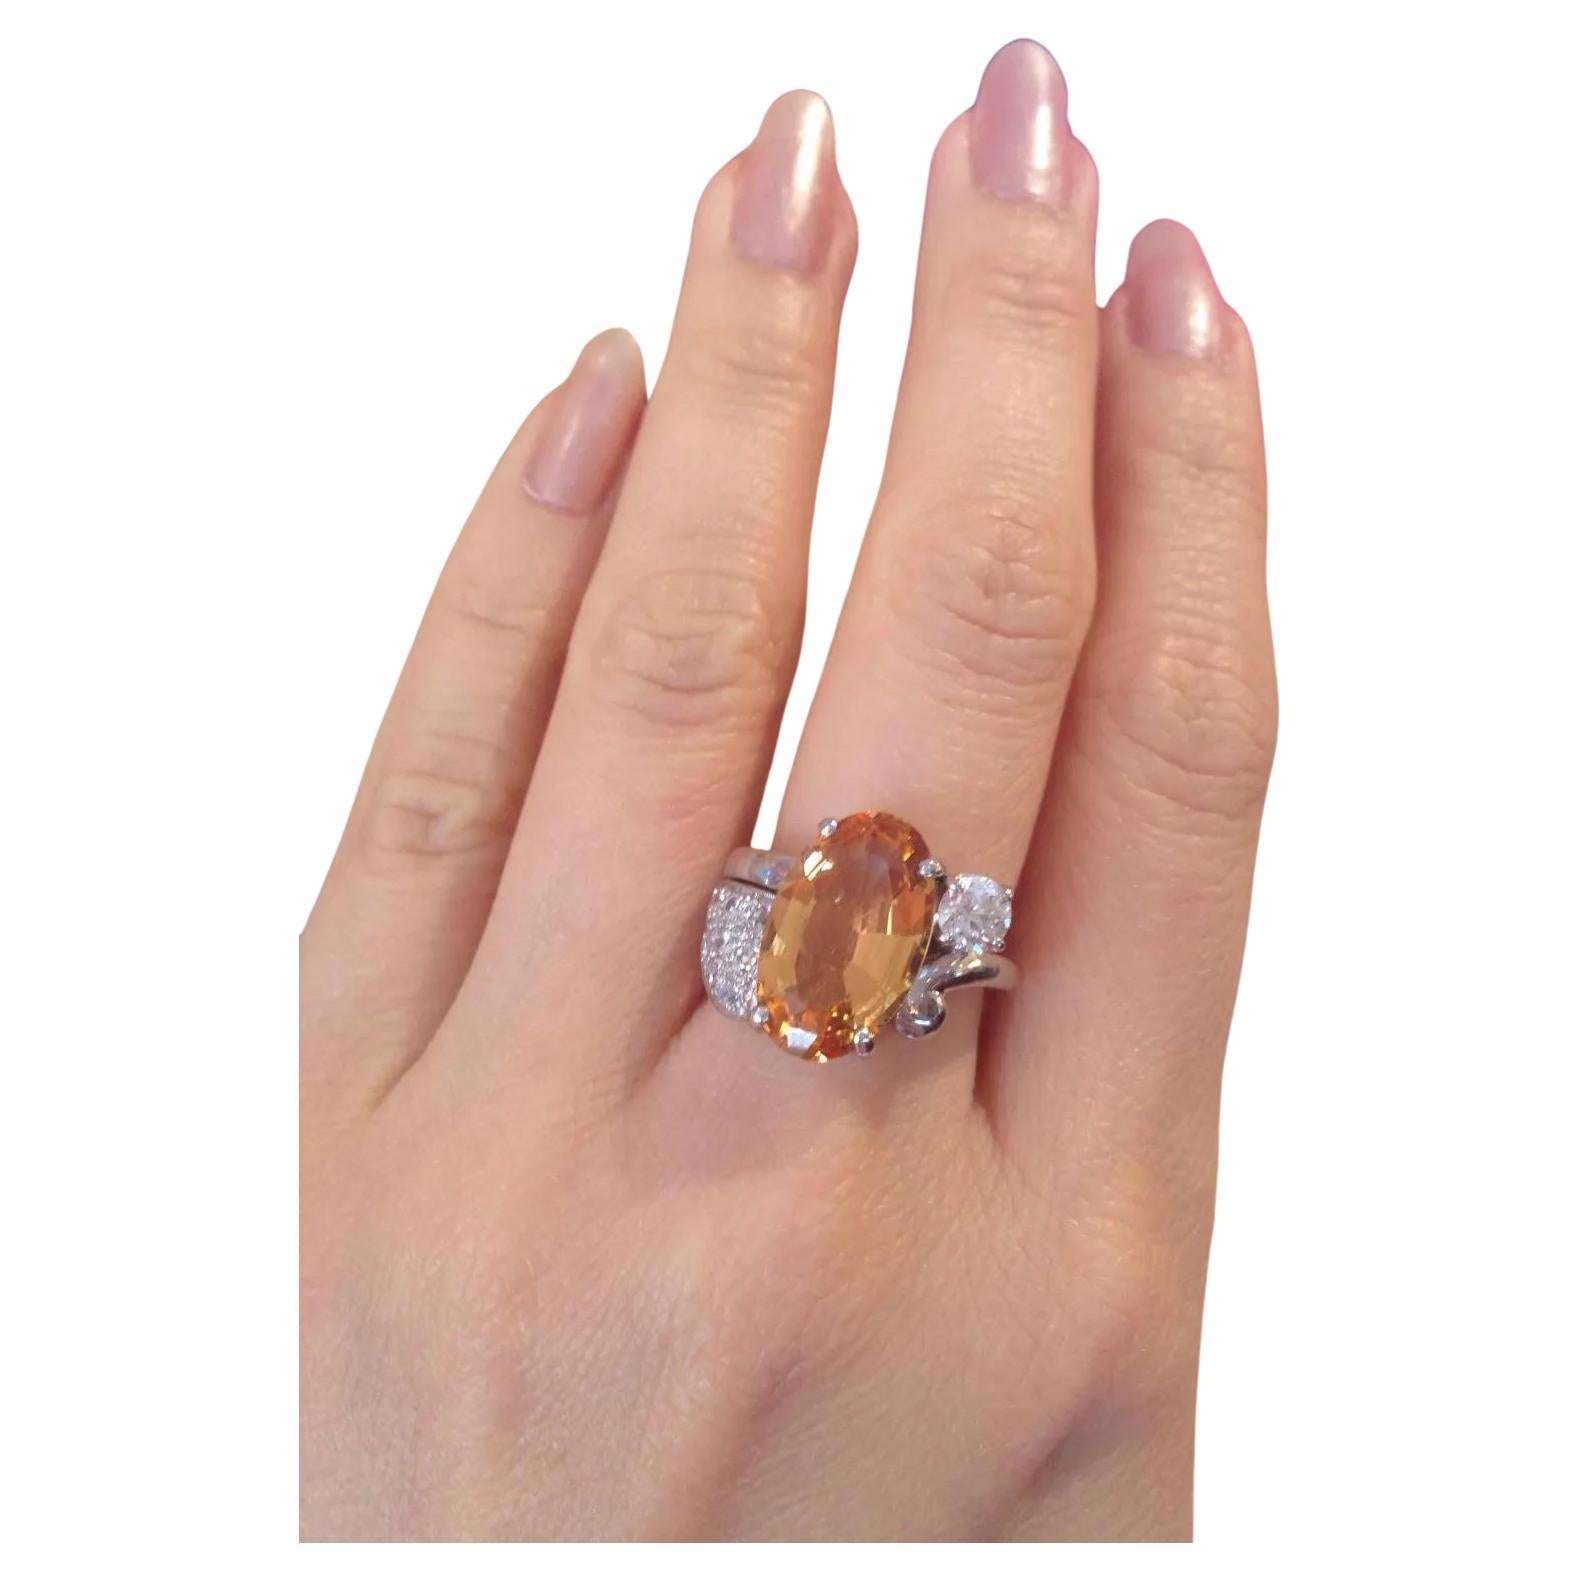 GIA certified 6.78 carat Yellow-Orange Topaz and Diamond Ring in Platinum